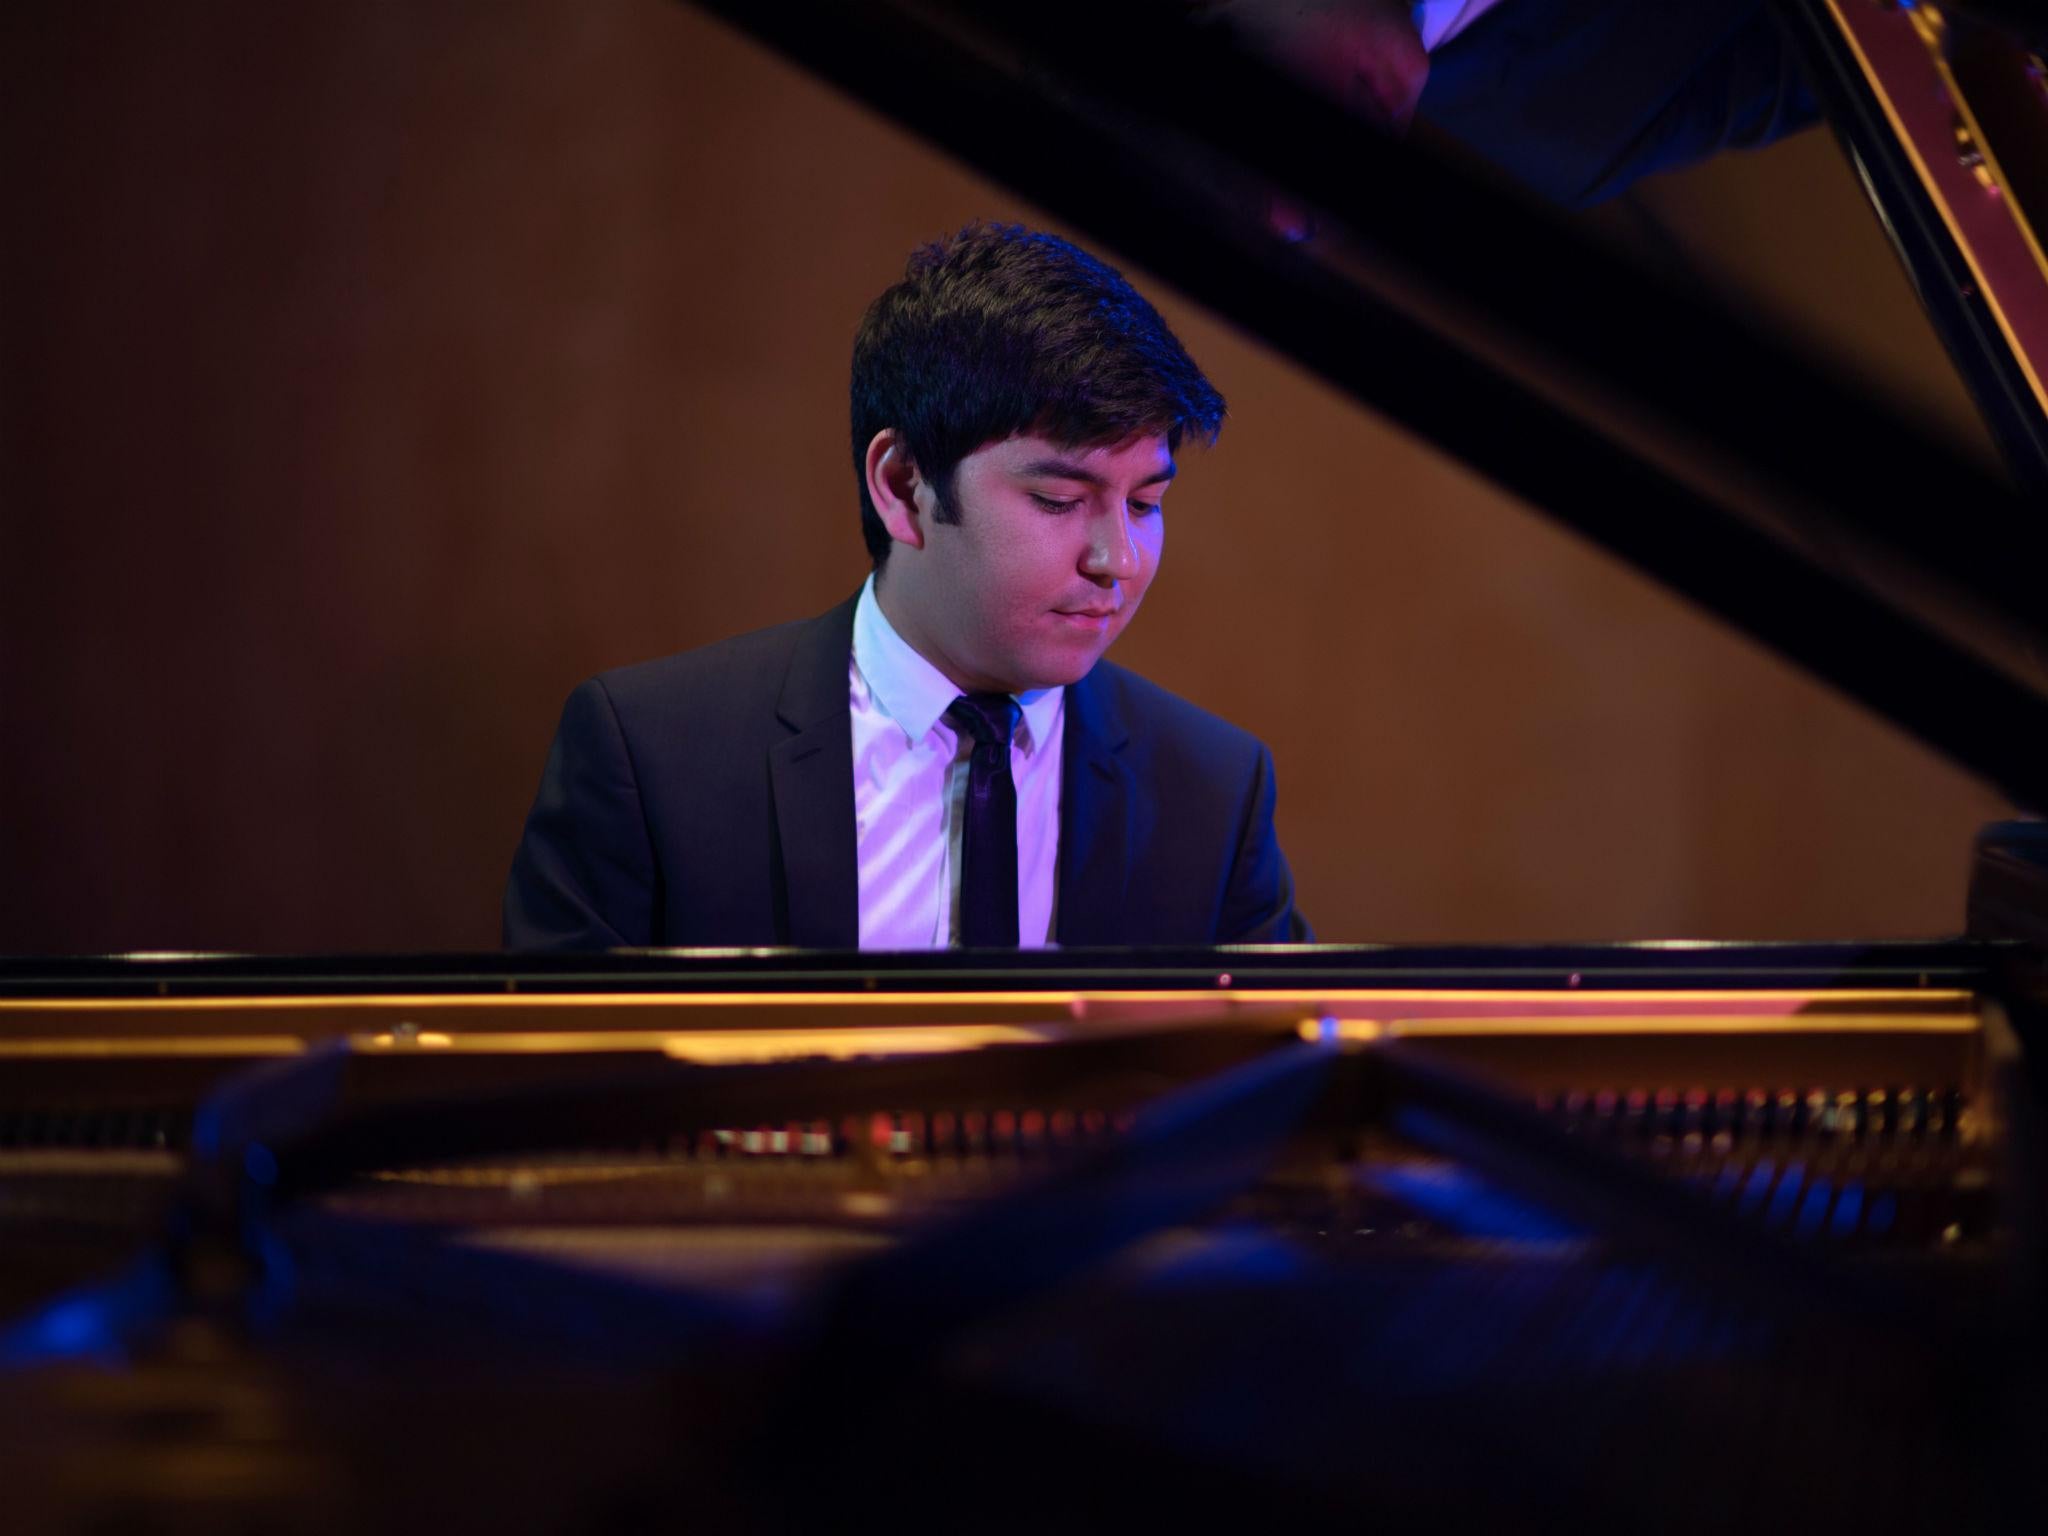 The Uzbek pianist Behzod Abduraimov performed Rachmaninov’s Second Piano Concerto